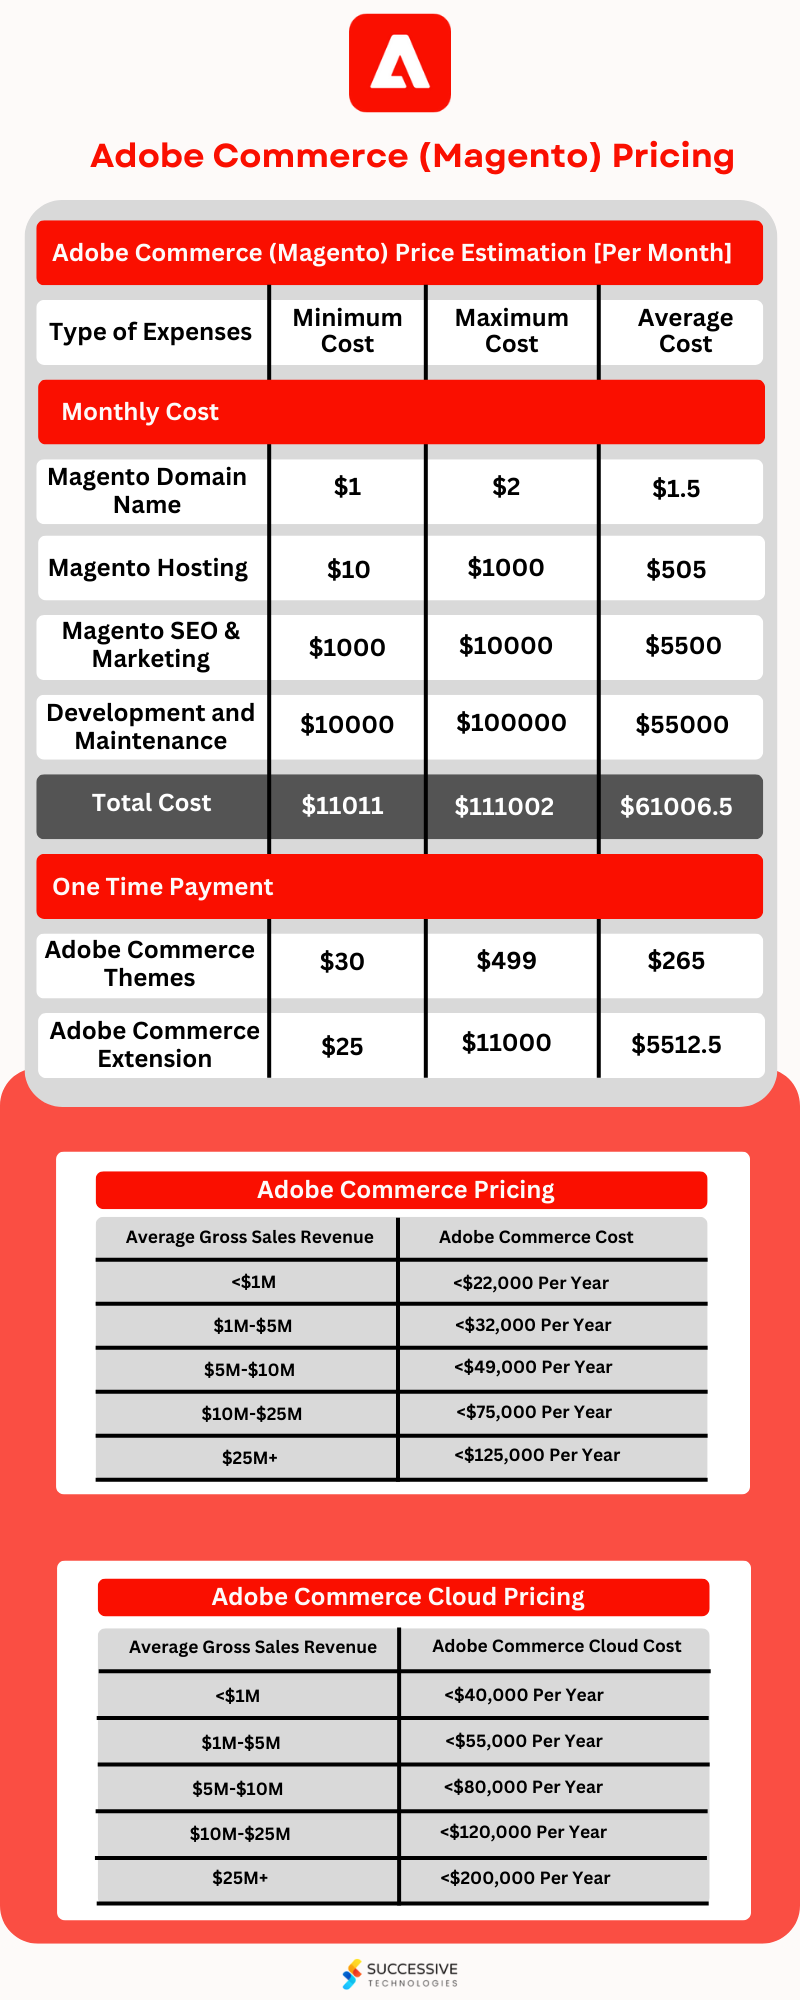 Adobe Commerce Cost